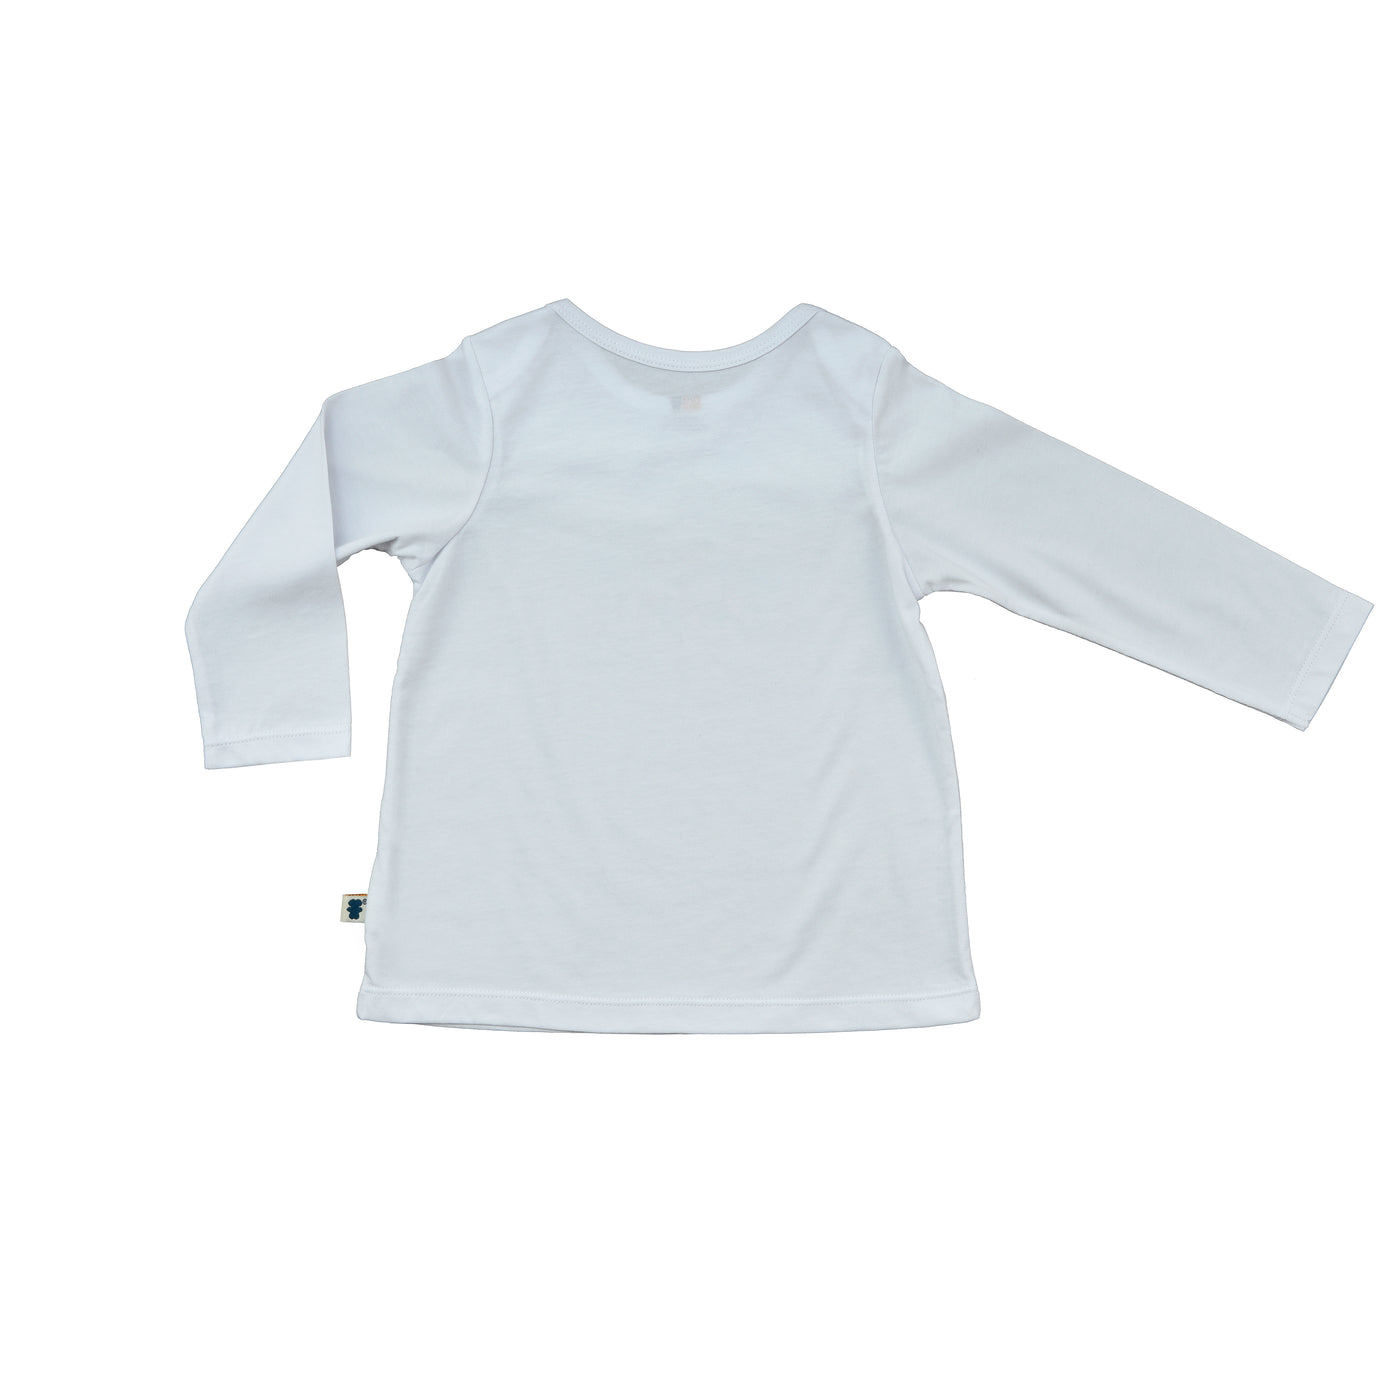 Baby Long Sleeve T-Shirt - Organic Cotton -Polar Bear